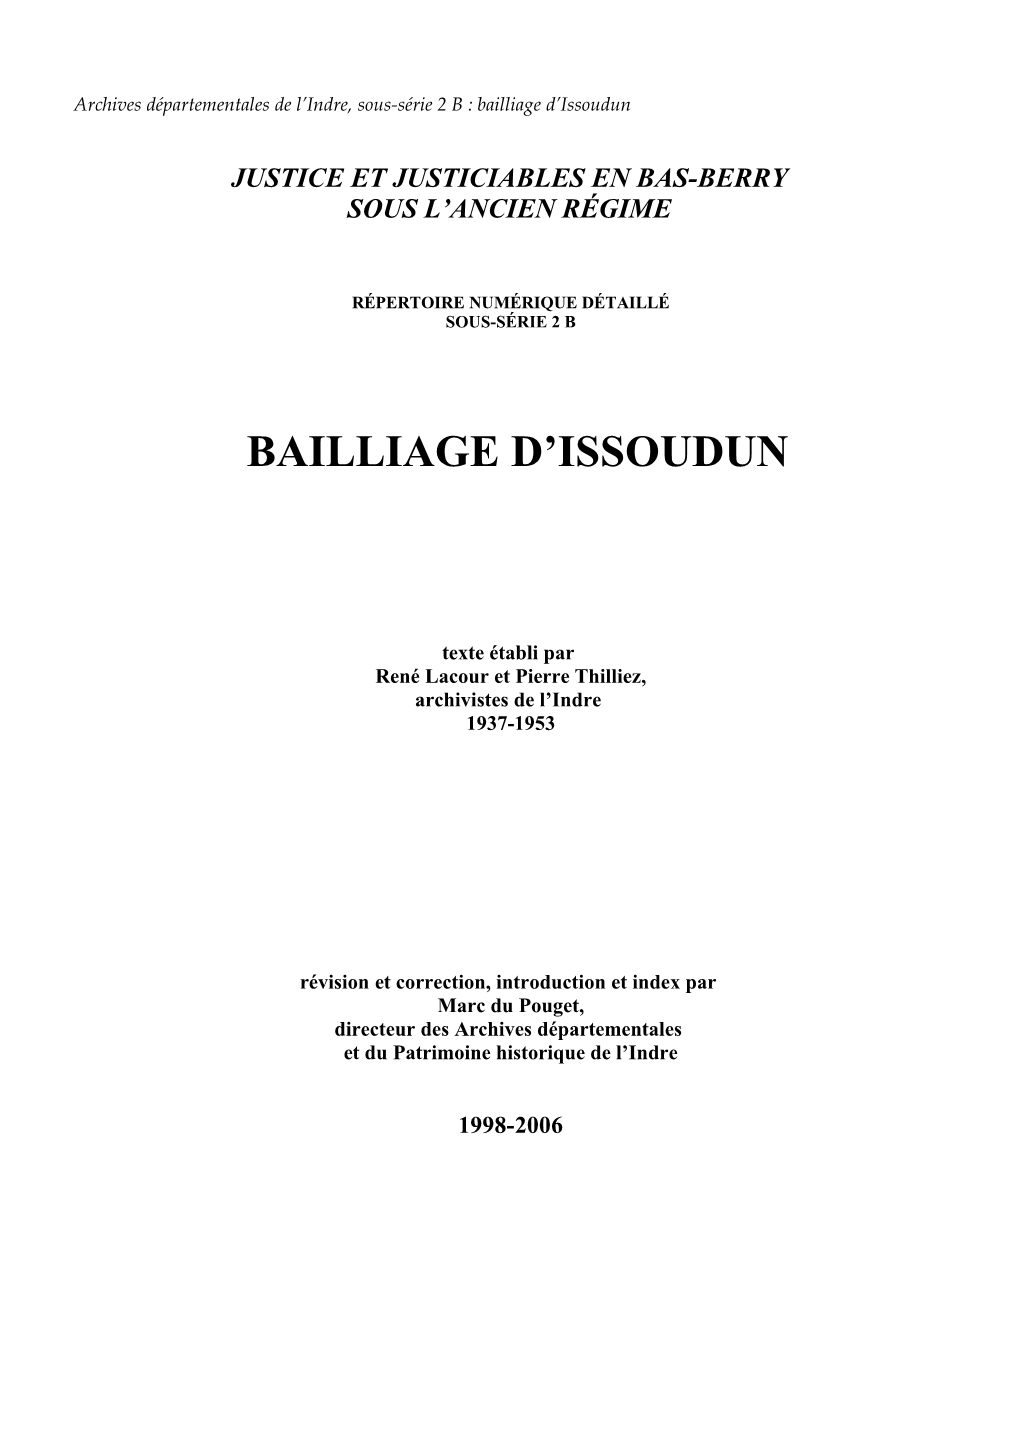 2 B : Bailliage D’Issoudun